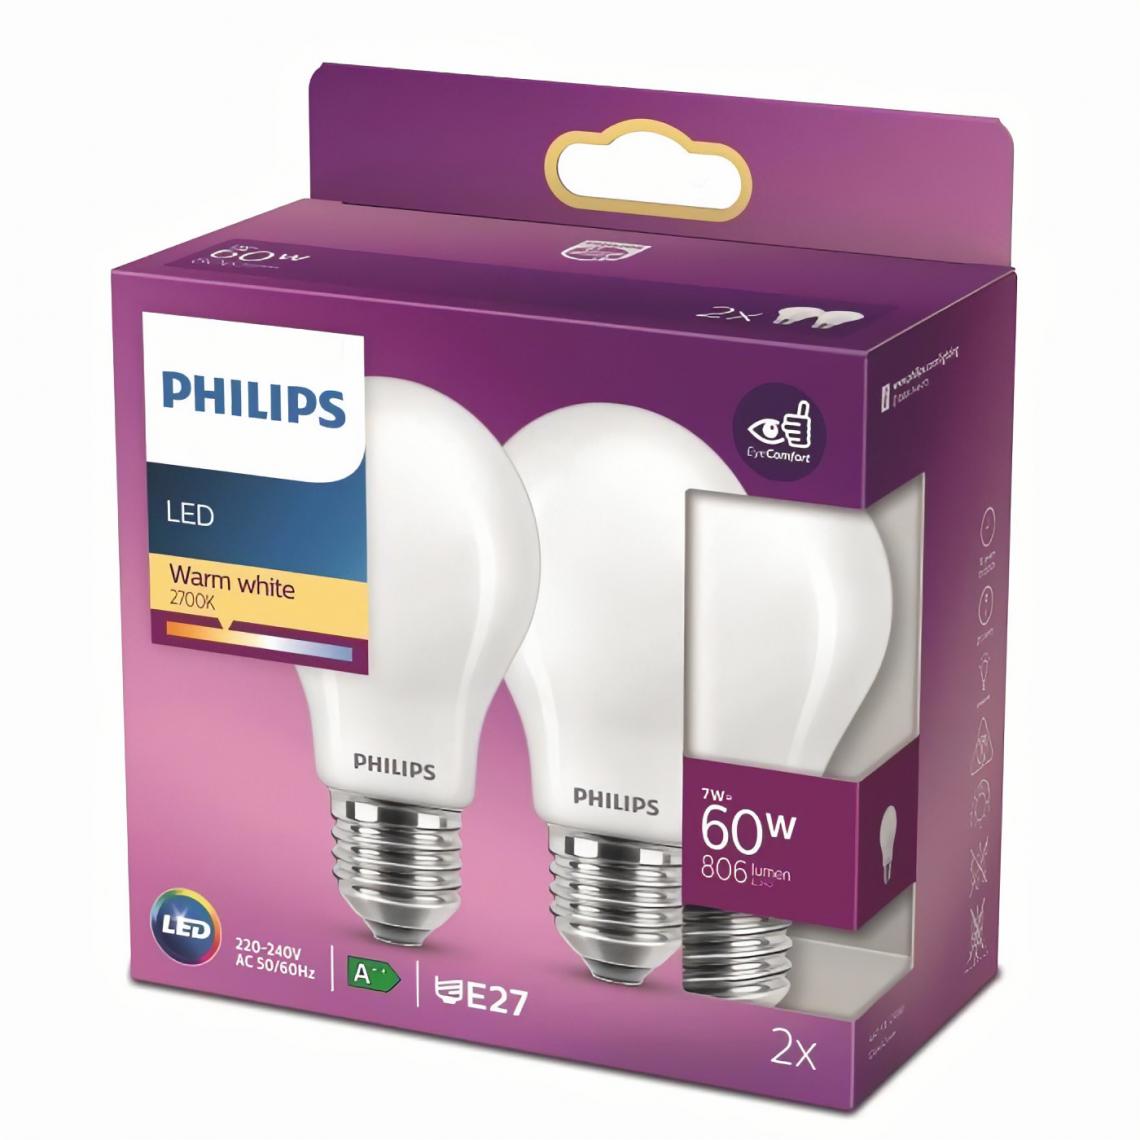 Philips - PHILIPS LED Classic 60W Standard E27 Blanc Chaud Non Dimmable Lot de 2 - Ampoules LED